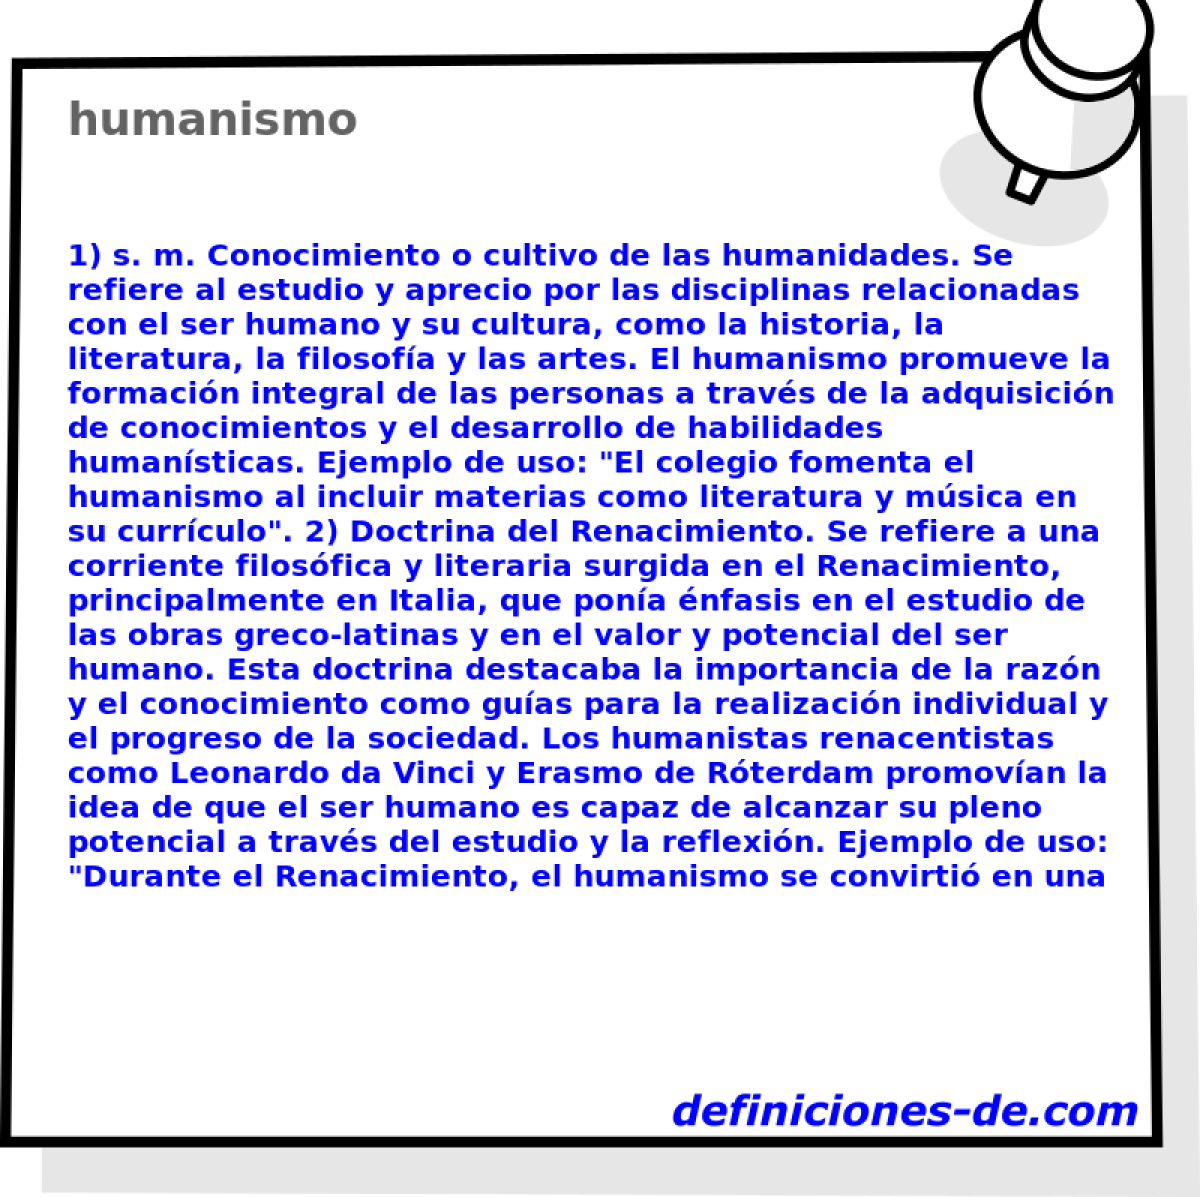 humanismo 